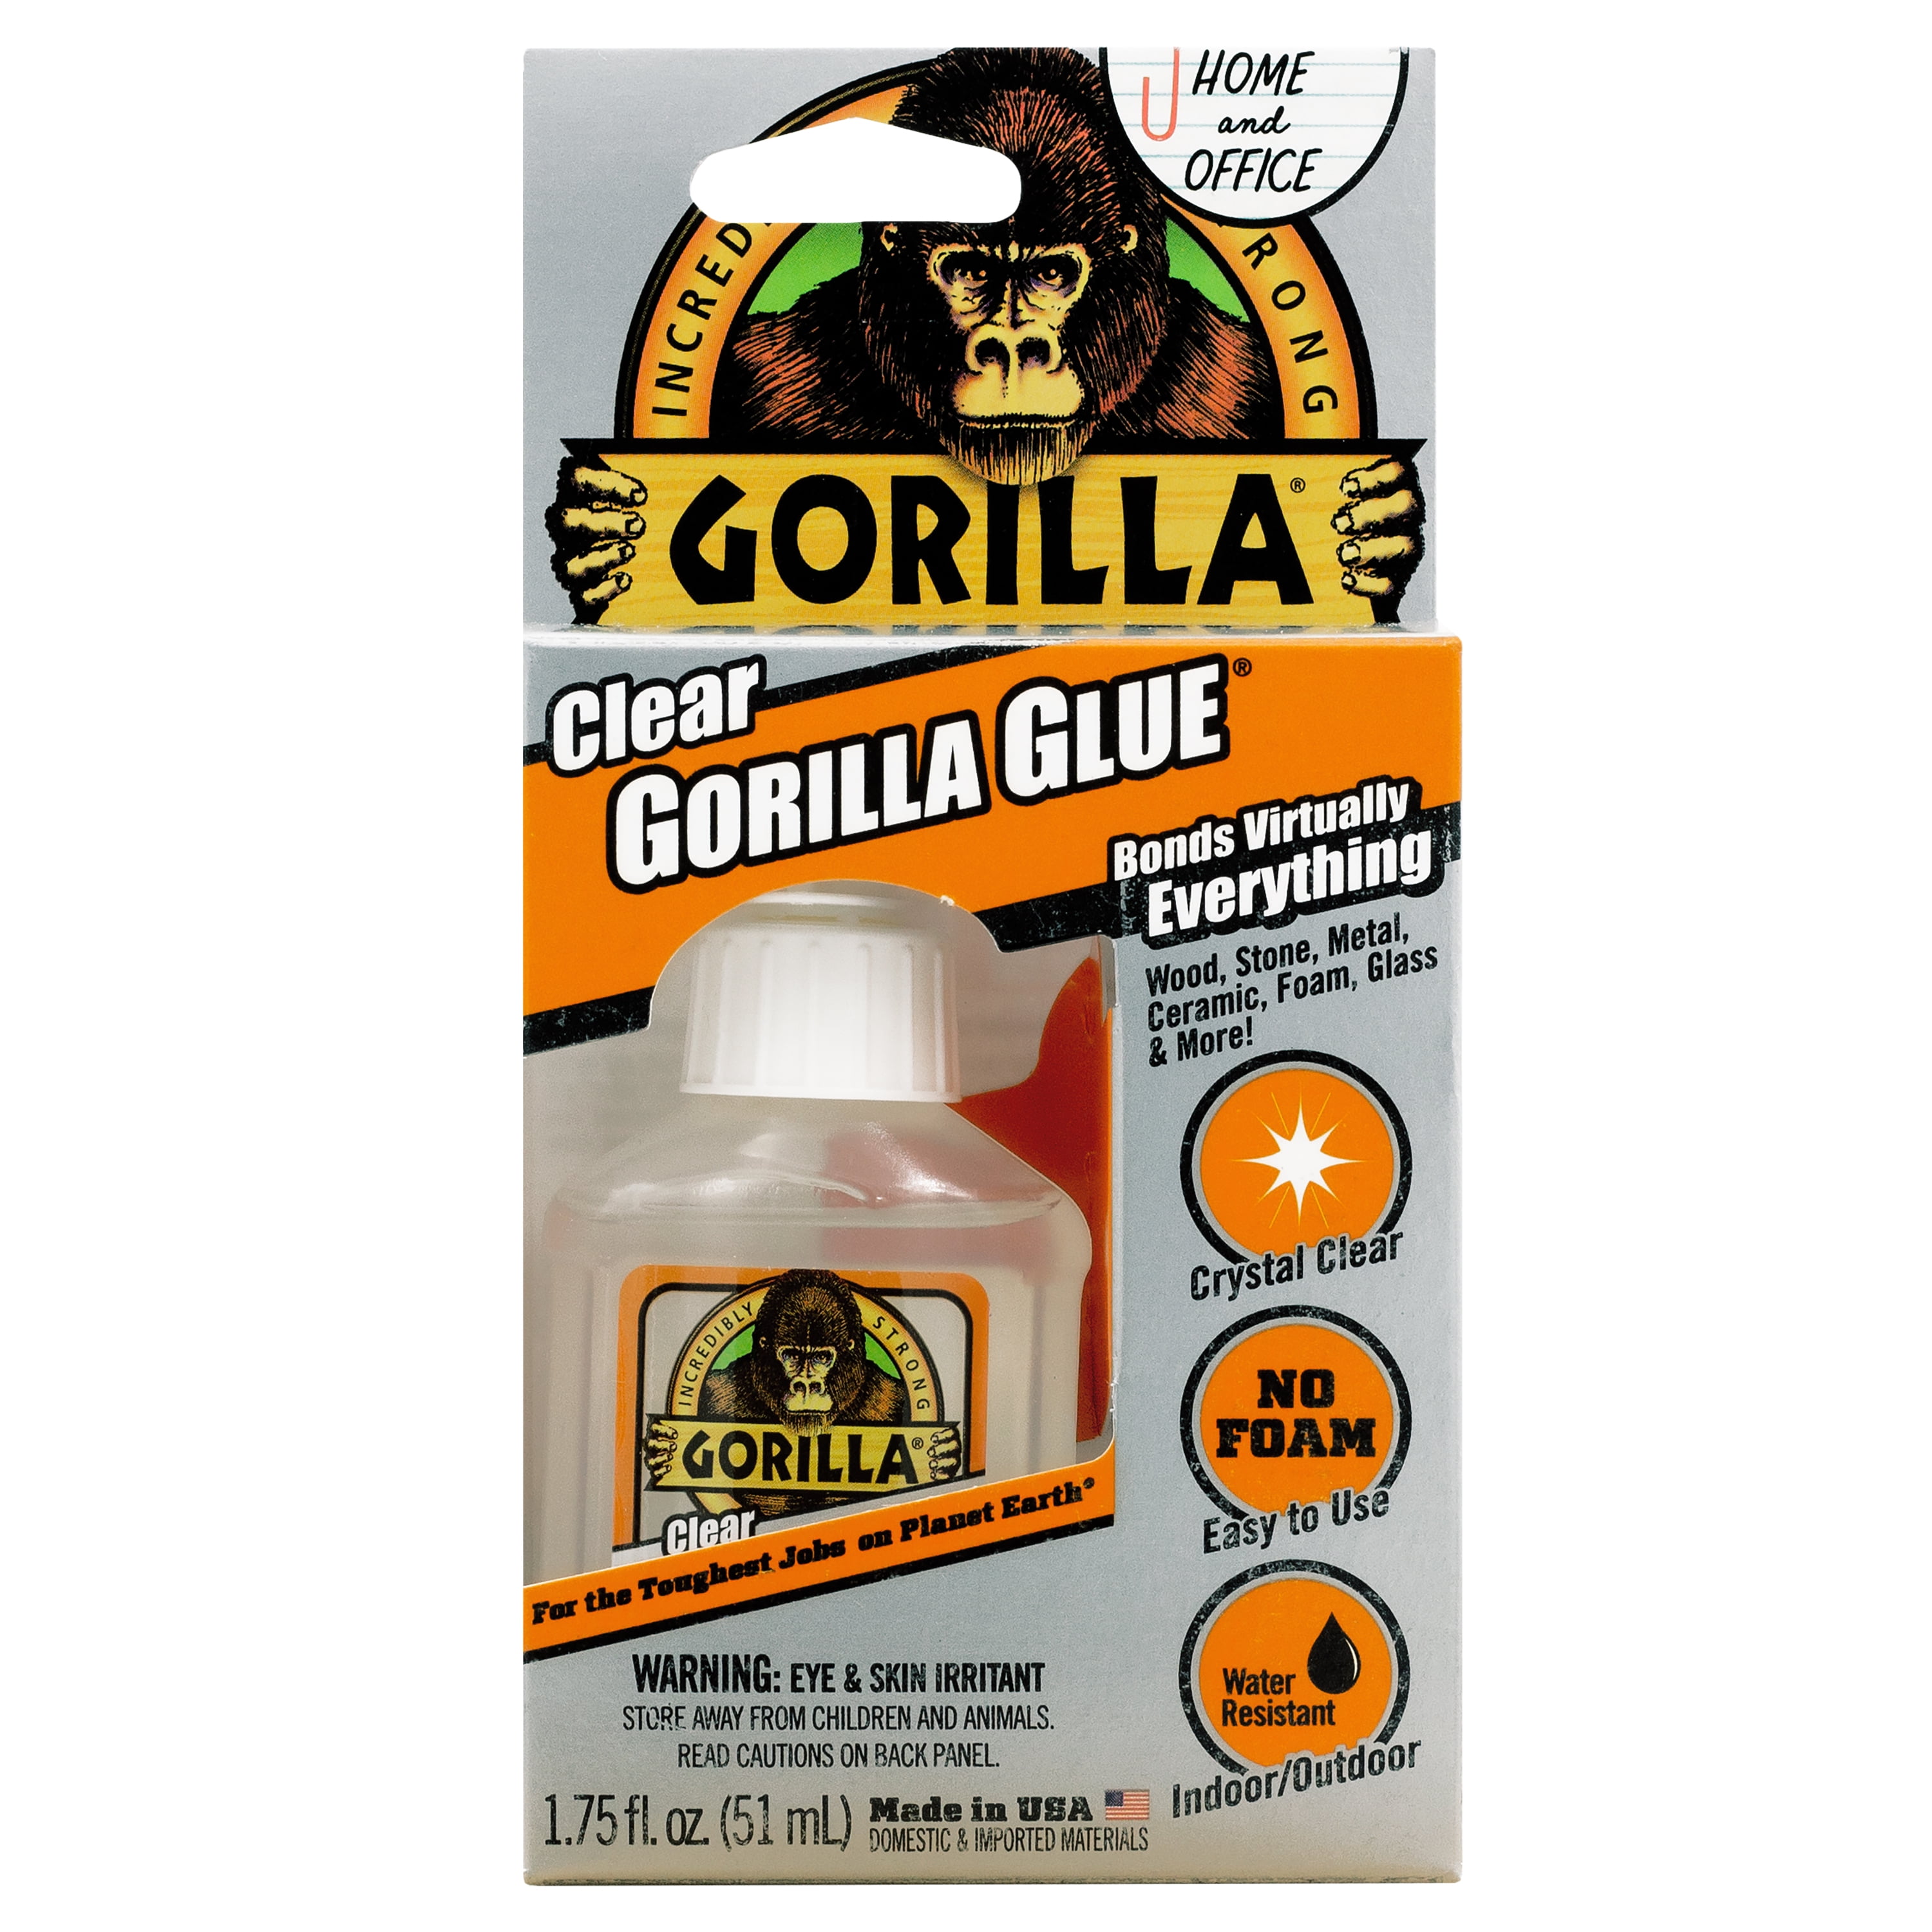 Gorilla Glue Adhesive, 2-Ounces #50001, 2 Oz, Tan